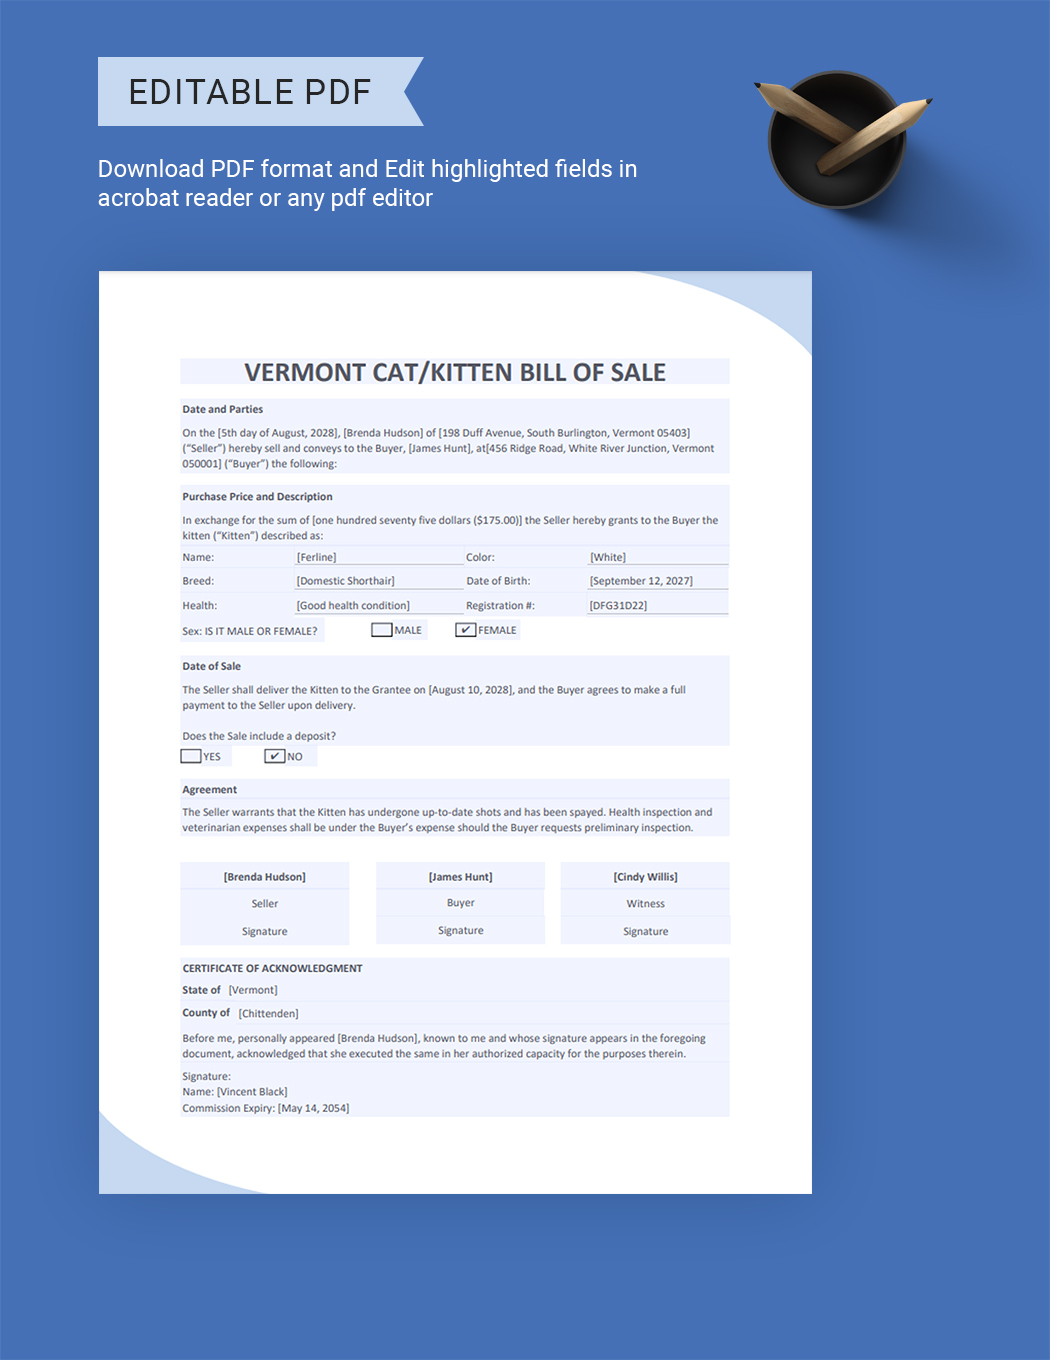 Vermont Cat/Kitten Bill of Sale Template